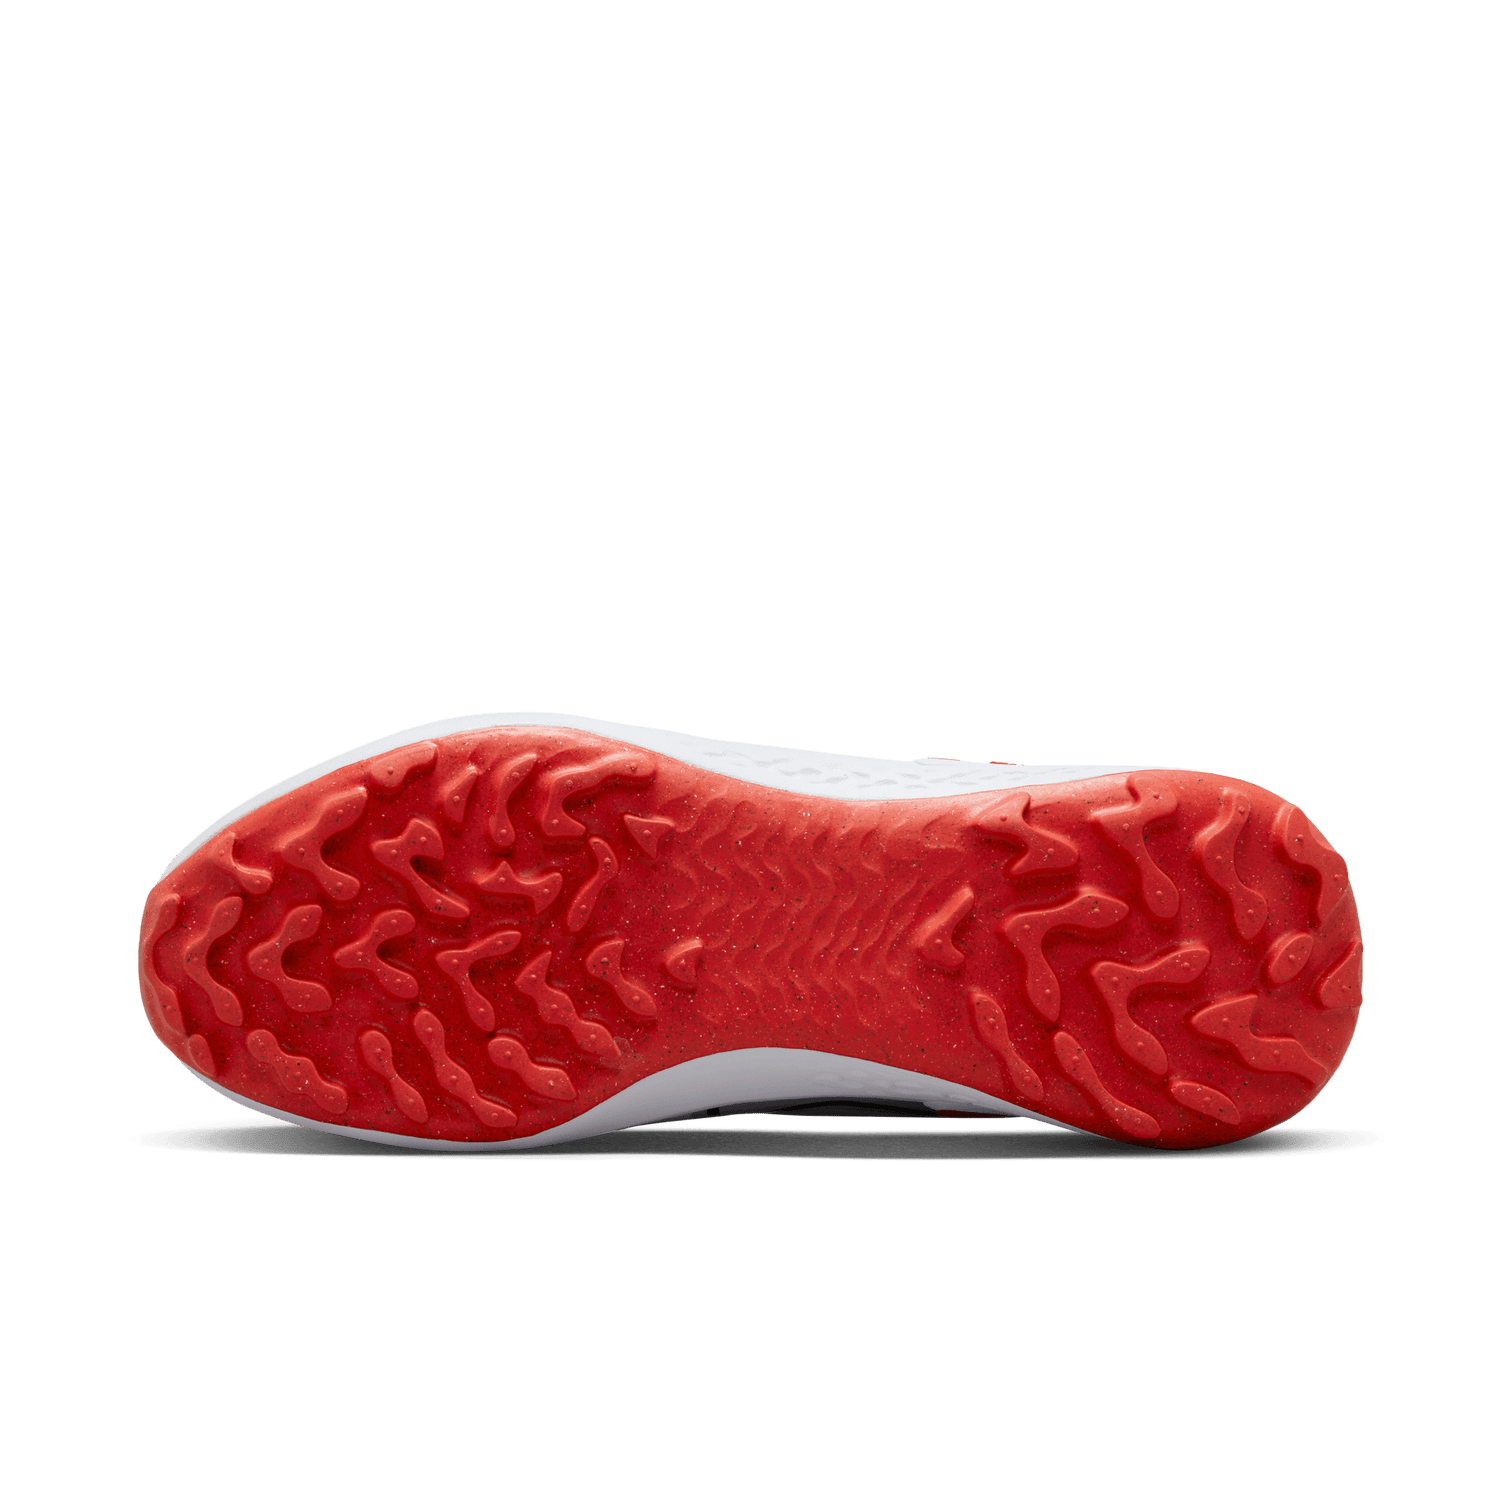 Nike Golf Infinity Pro 2 Spikeless Golf Shoes DJ5593   